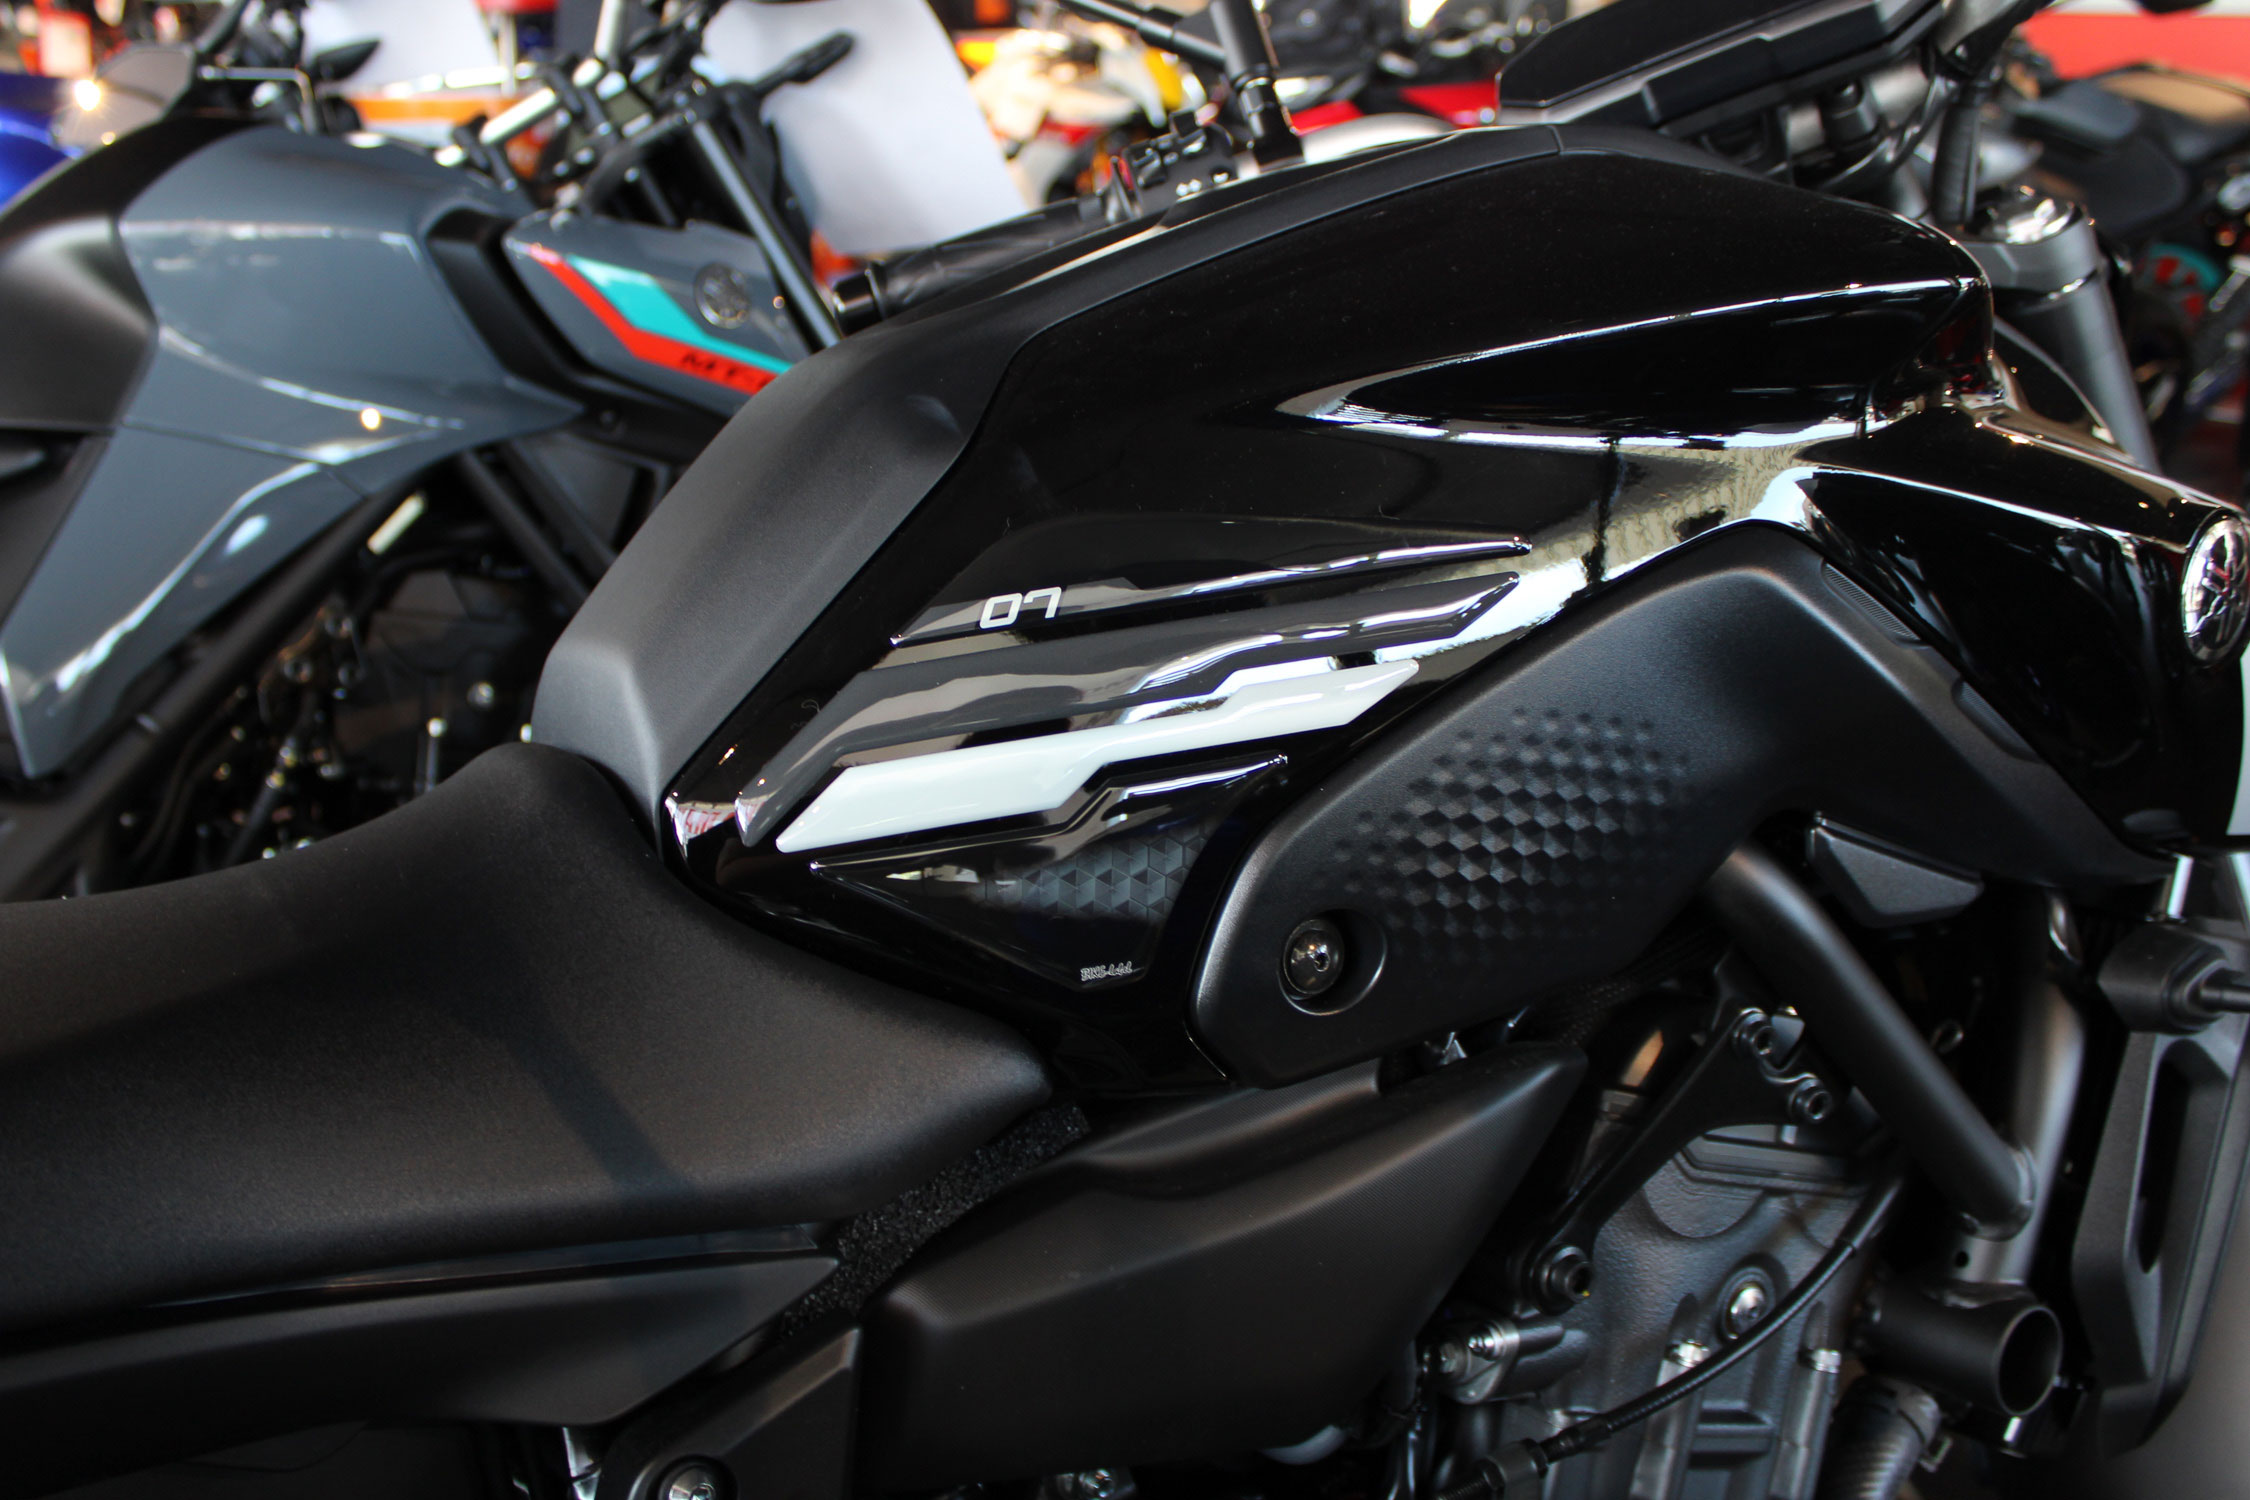 Felgenrand Reflex rot Stripes Motorrad Aufkleber kompatibel für Yamaha